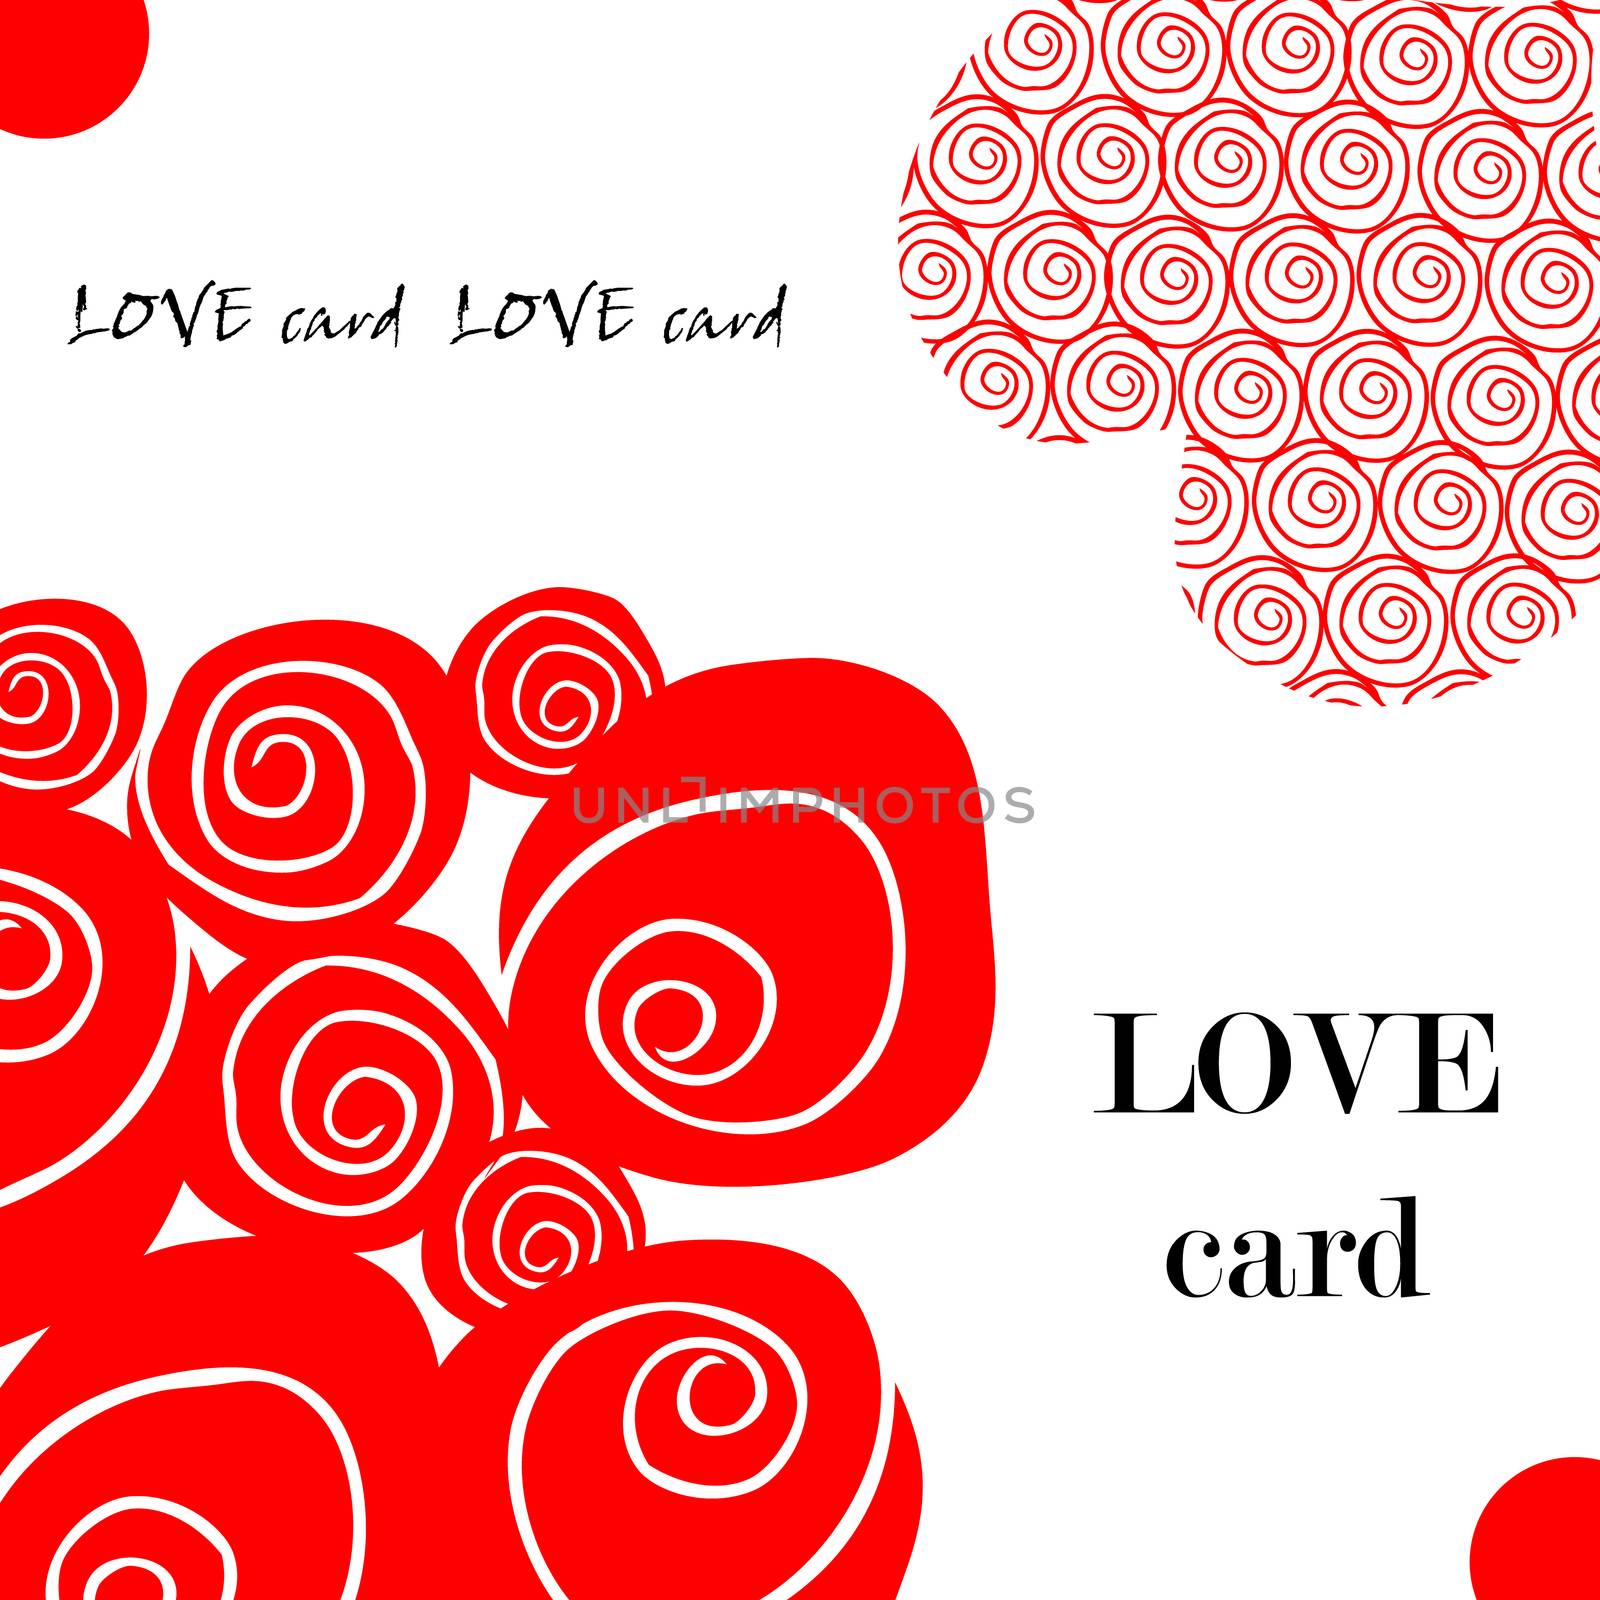 Love fake paper card, heart, flower, valentin's day